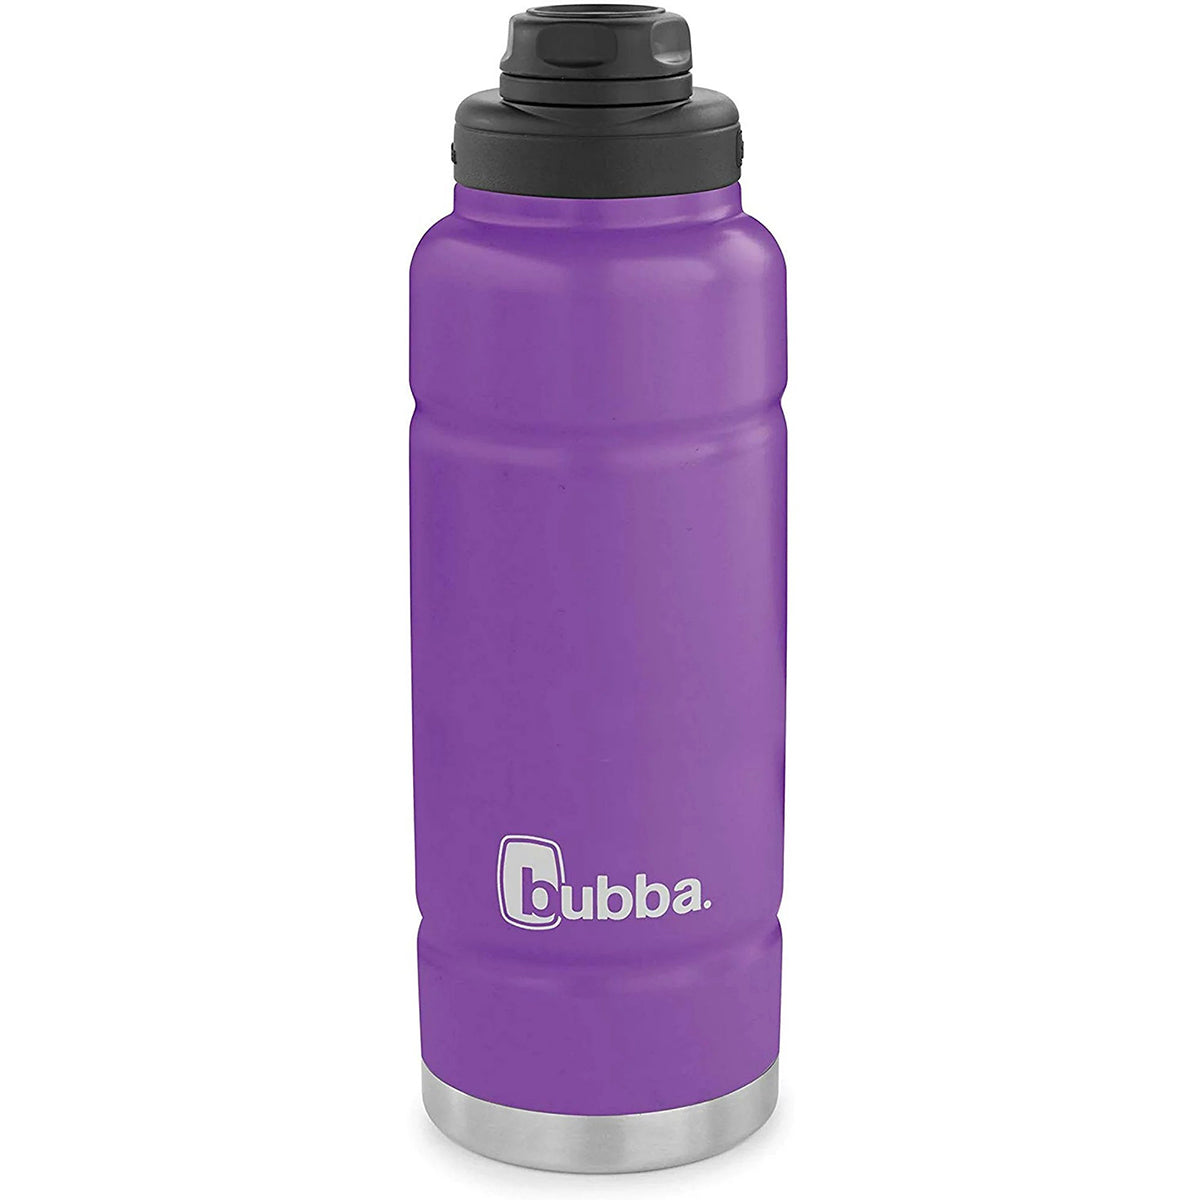 Bubba 24 oz. Trailblazer Insulated Stainless Steel Water Bottle - Juicy Grape Bubba